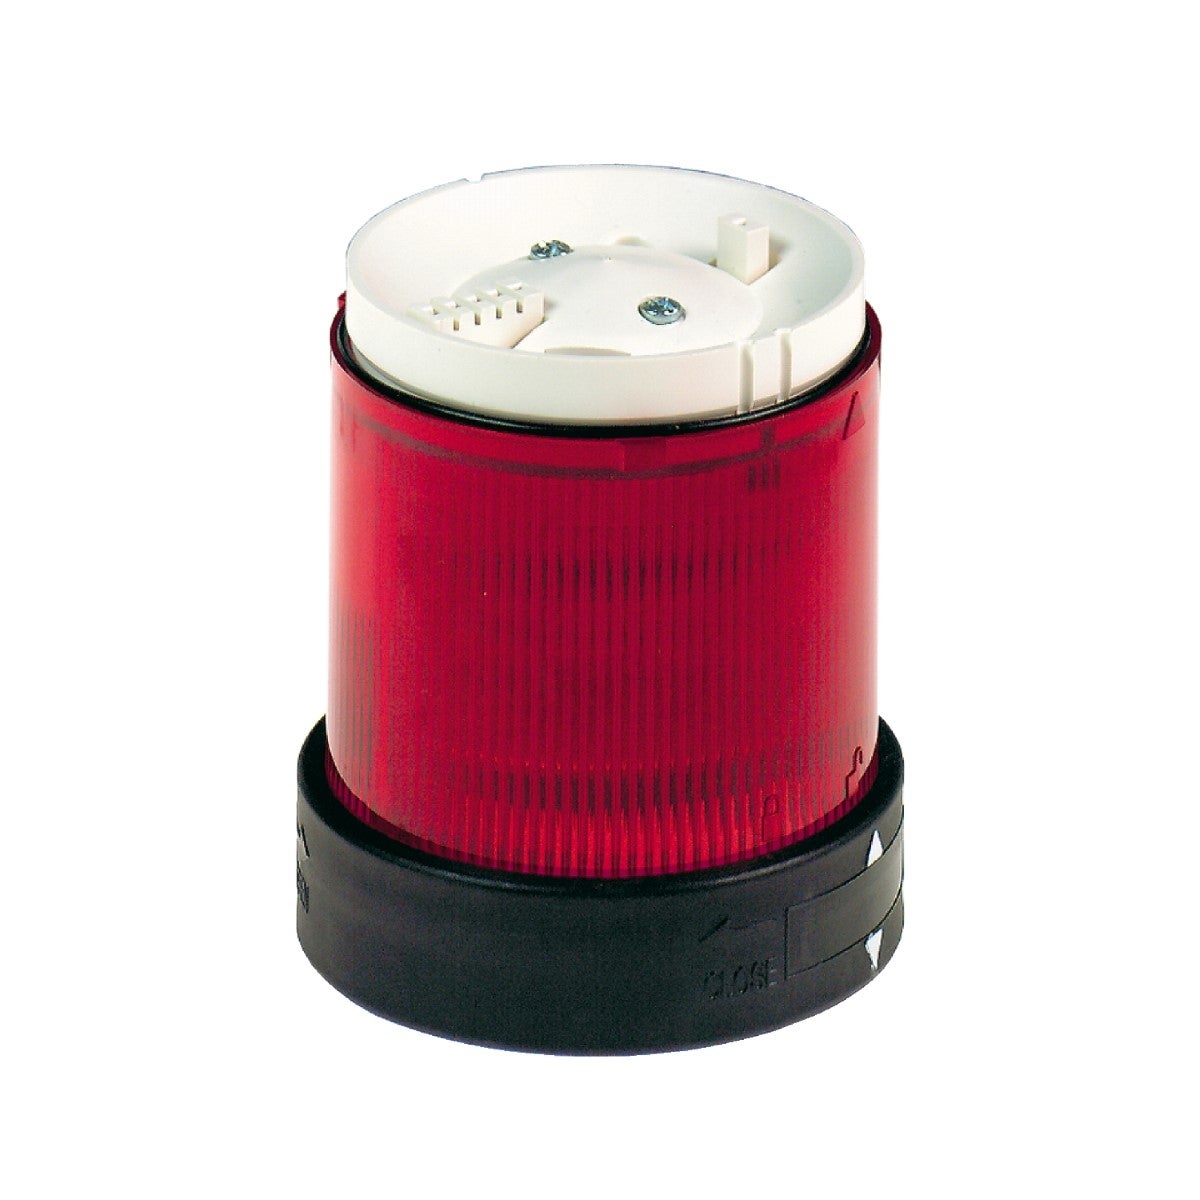 Indicator bank, Harmony XVB, illuminated unit, plastic, red, 70mm, steady, light diffuser, 24V AC/DC